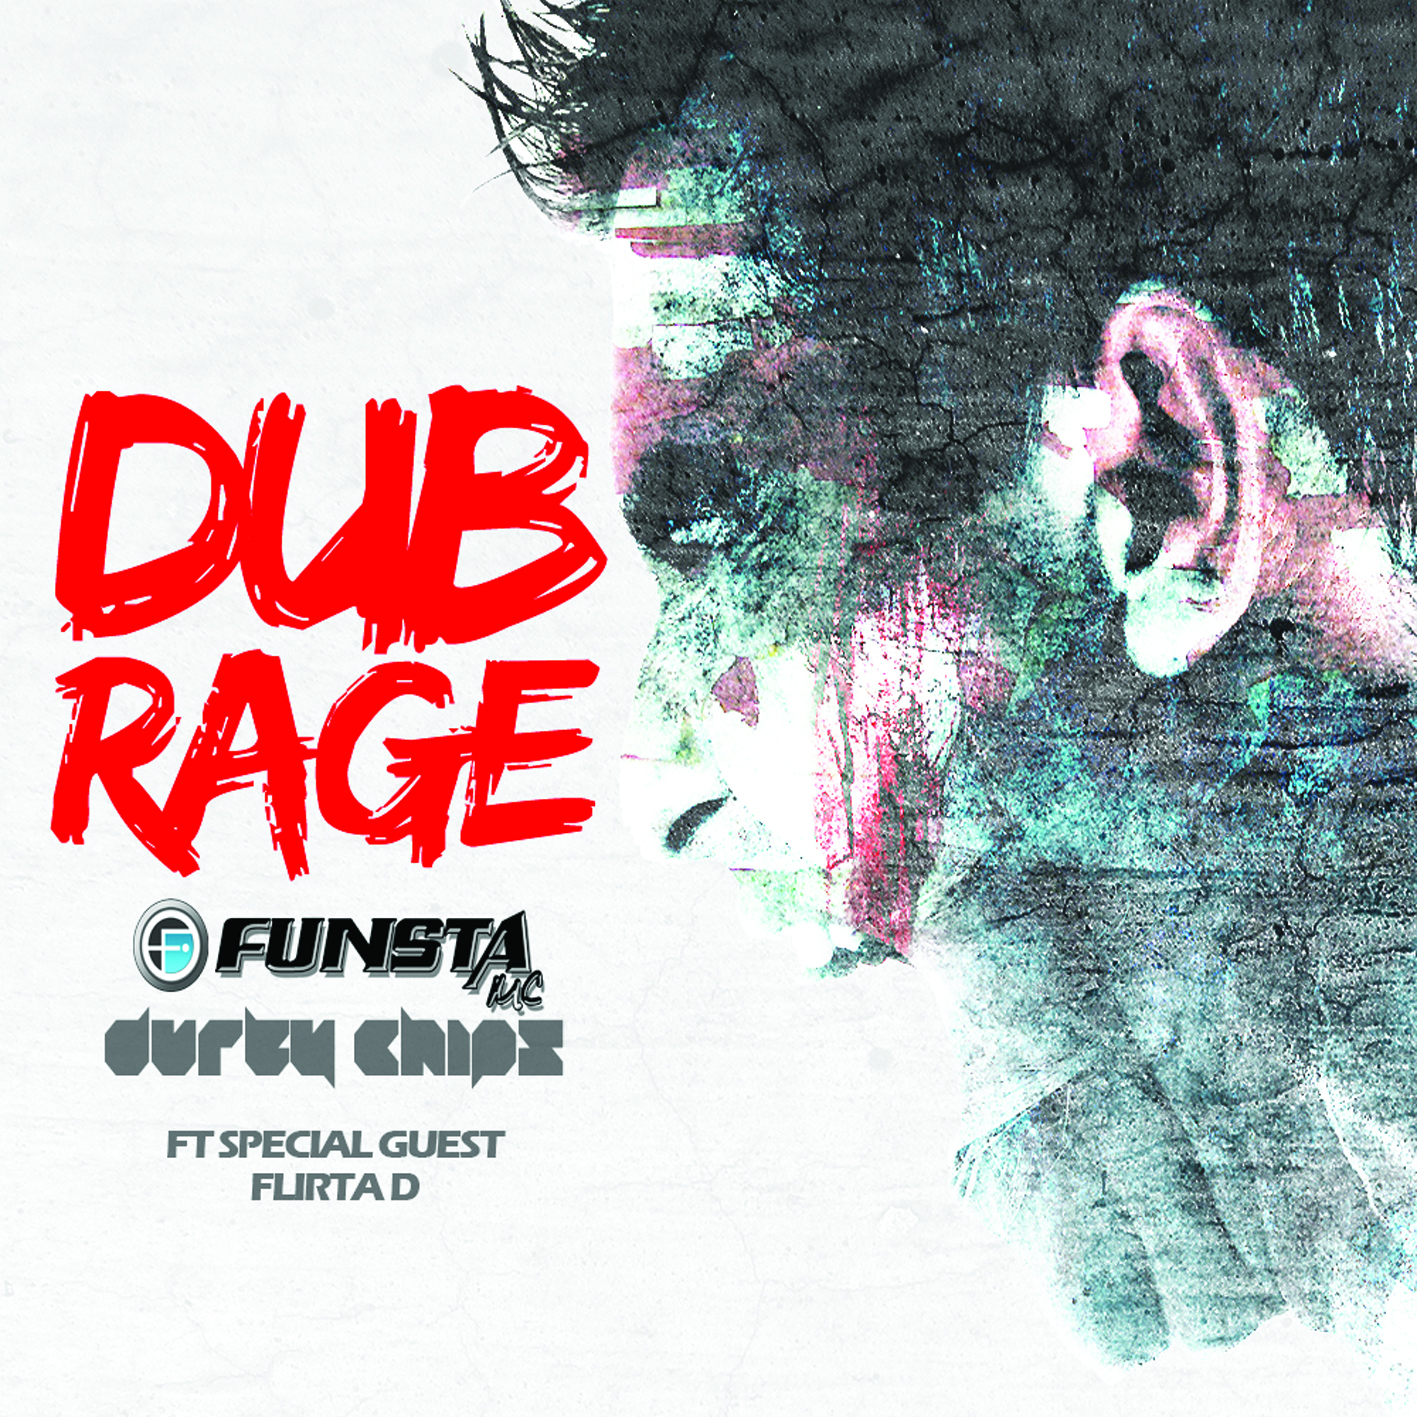 Dub:Rage